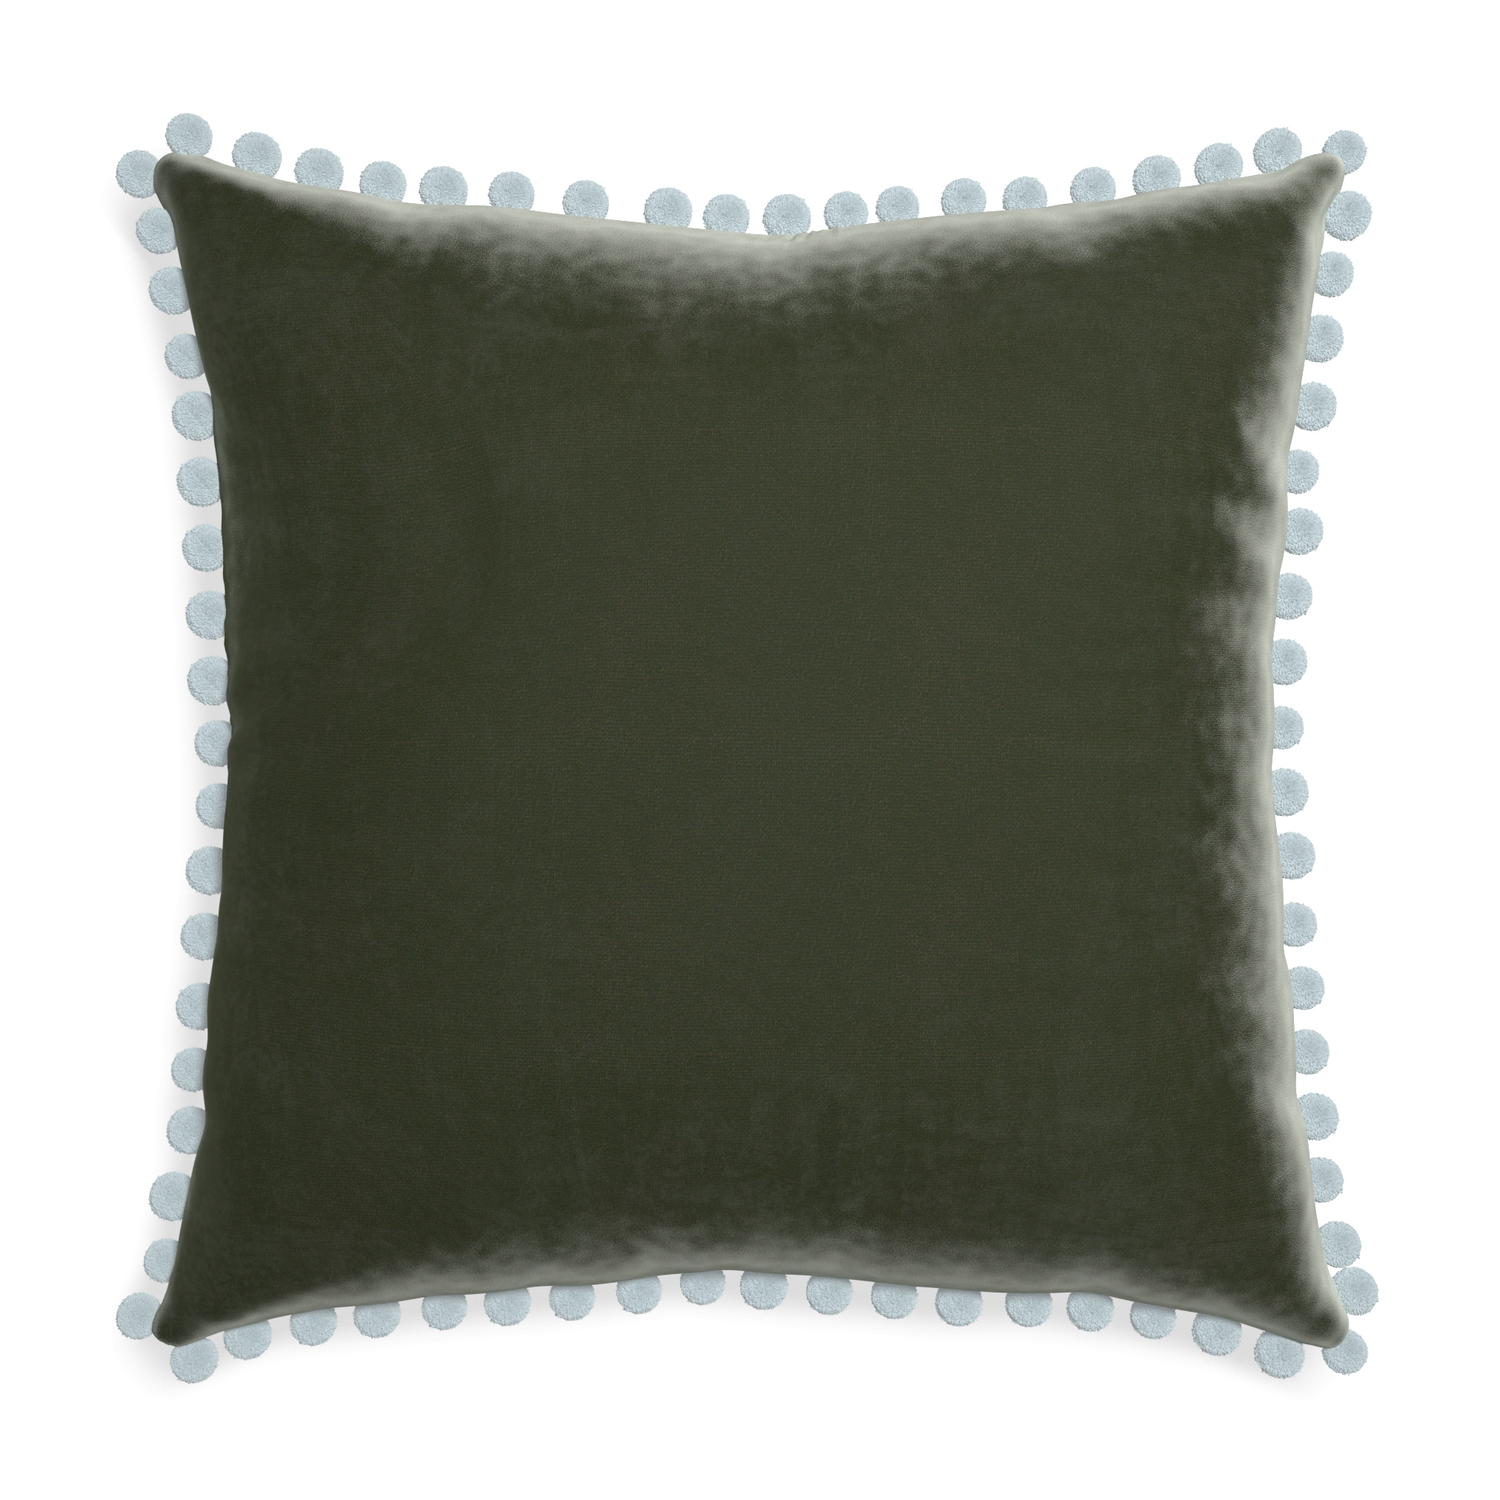 Euro-sham fern velvet custom pillow with powder pom pom on white background